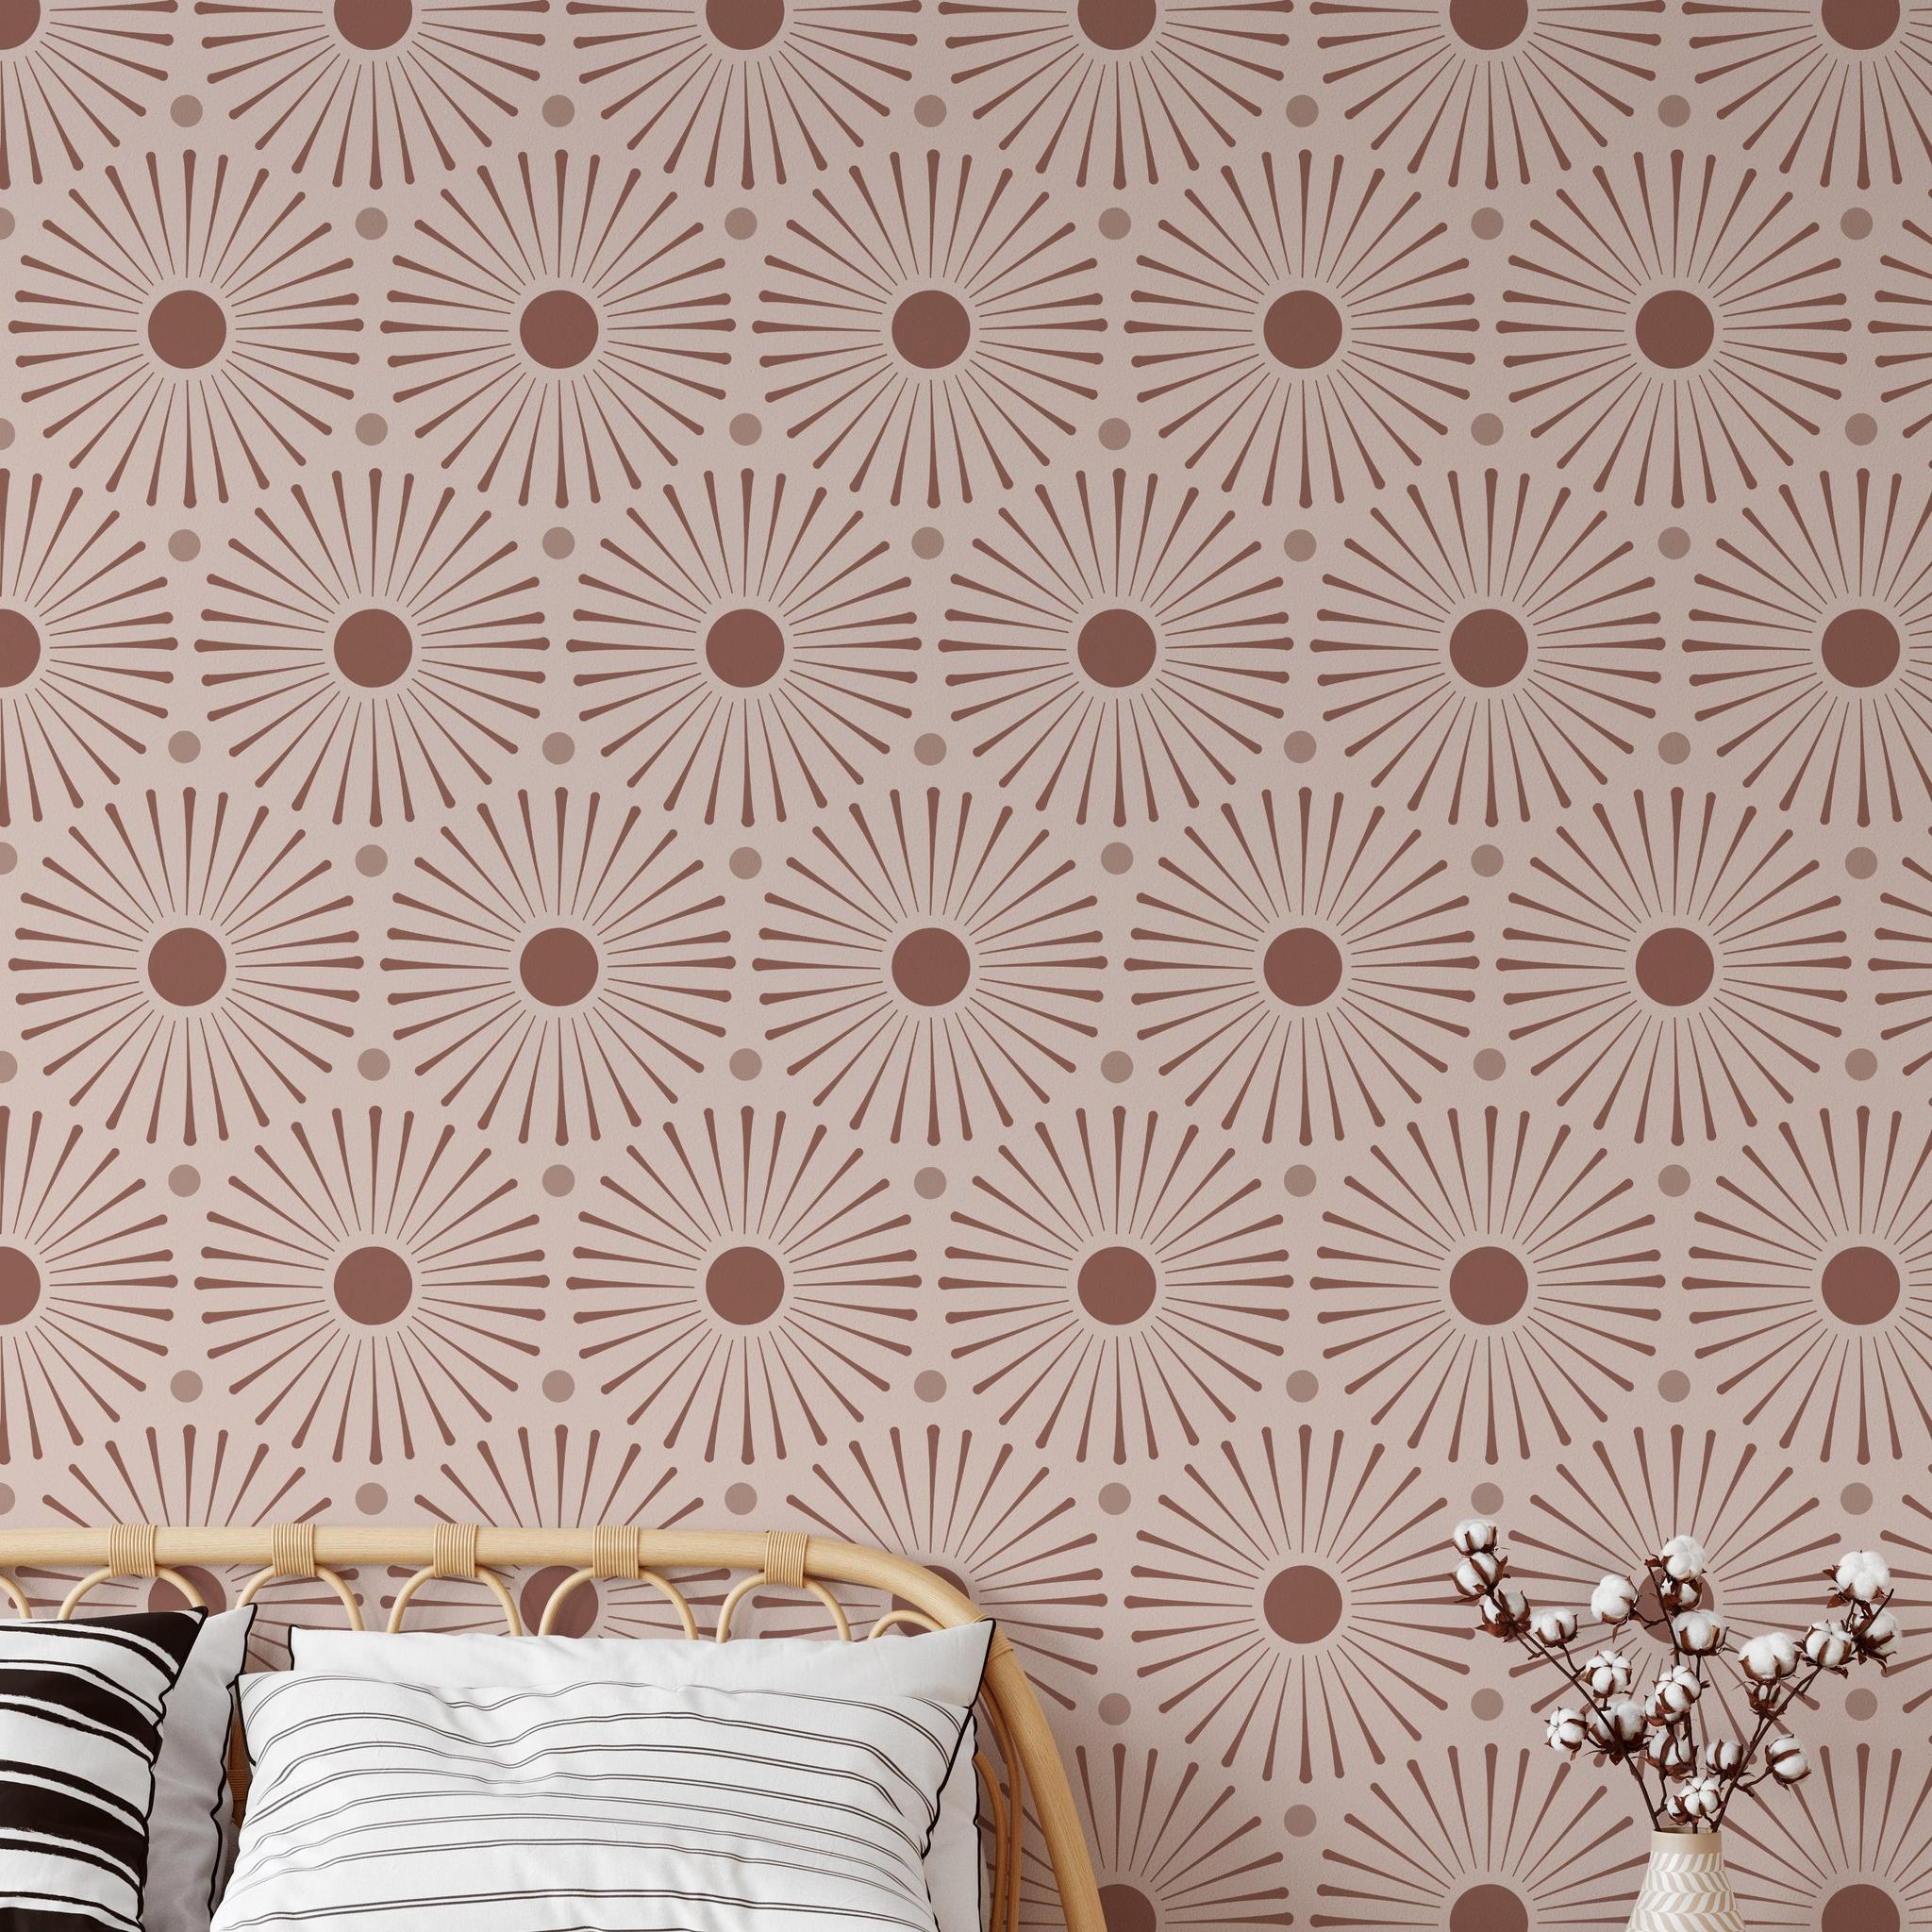 Esmeralda Wallpaper by Wall Blush SG02, elegant design in a cozy bedroom setting, highlighting the stylish wall decor.
